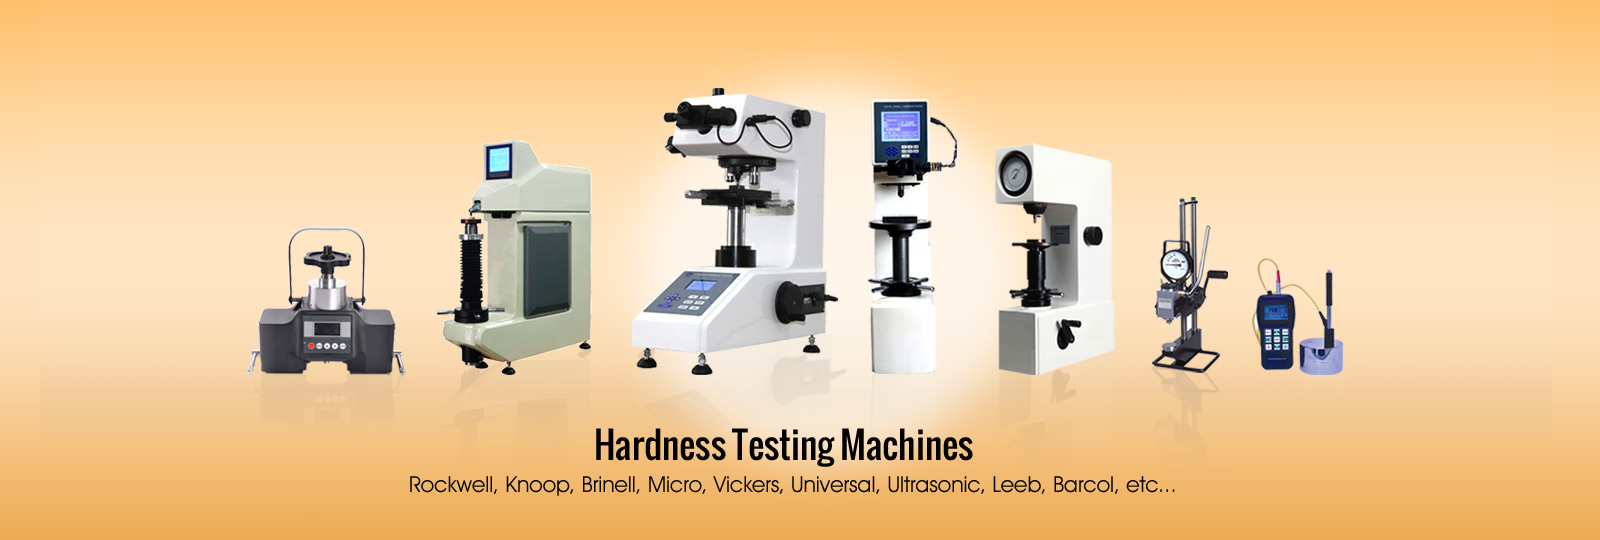 Hardness testing Machines